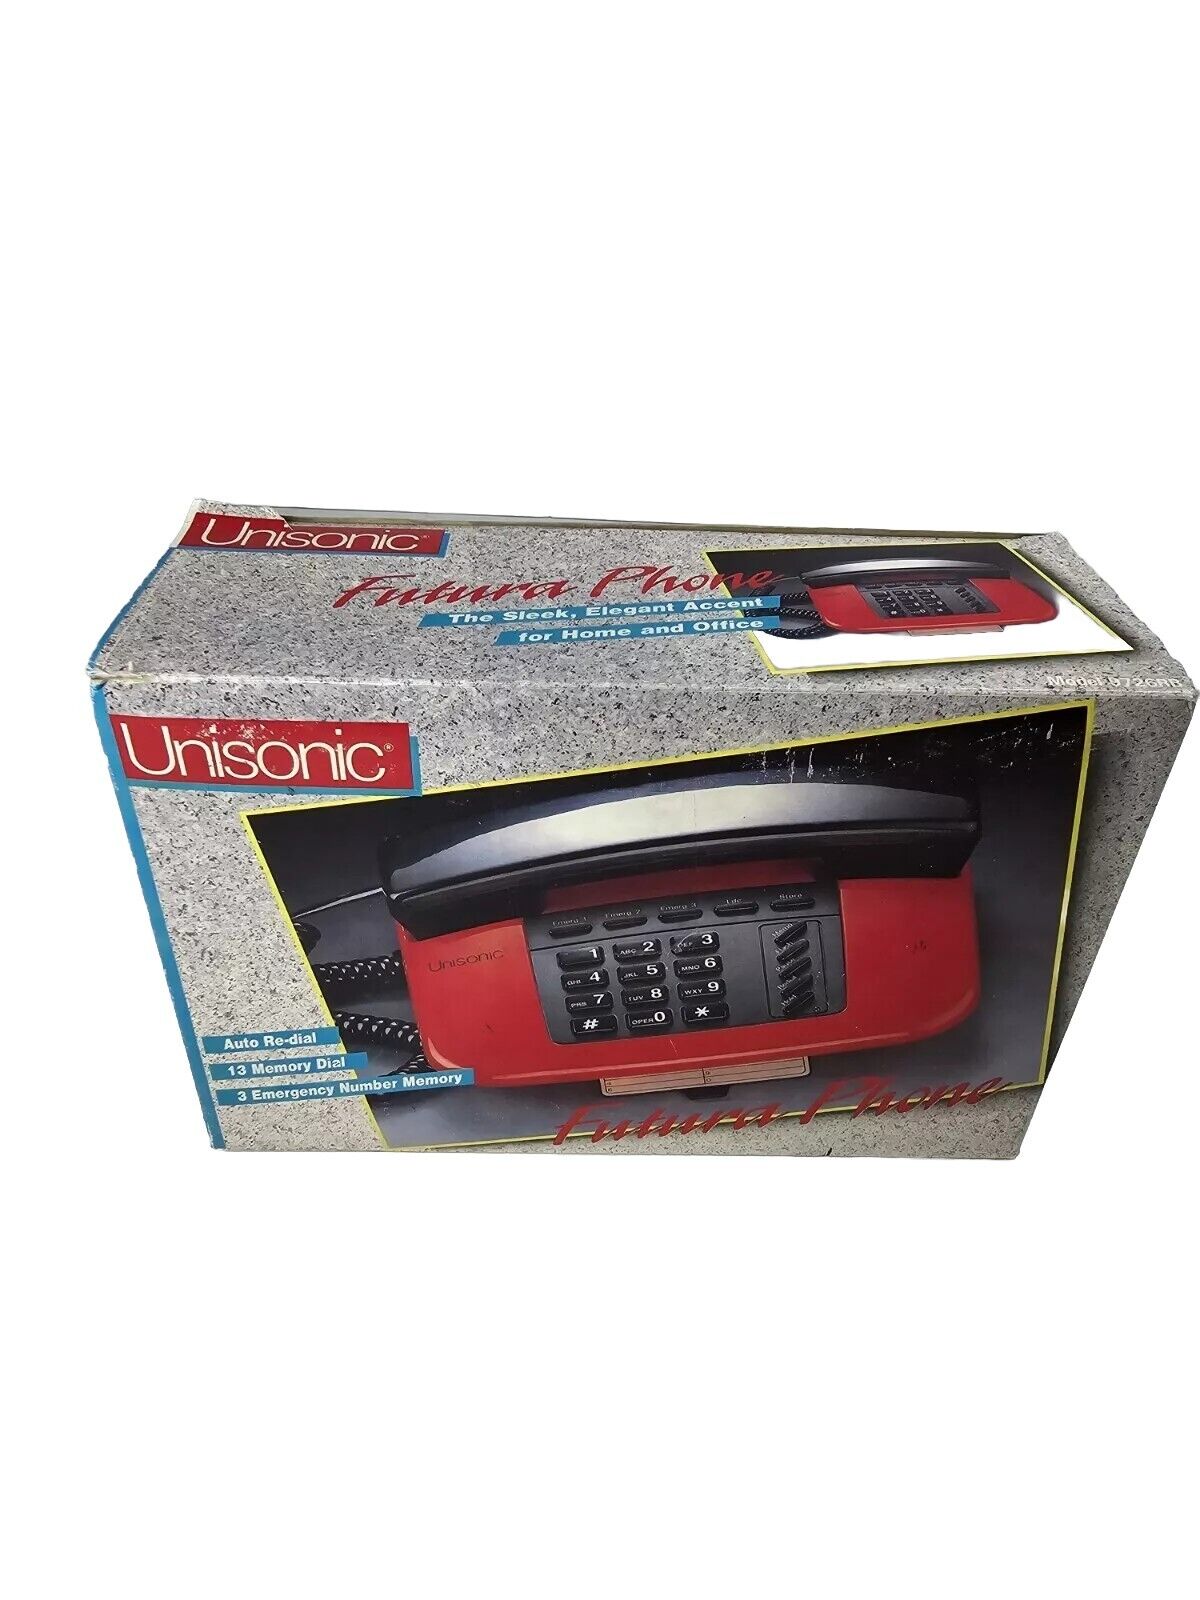 Unisonic Futura Phone Red/Black 9726RB Phone Corded Telephone 80's 90's Vtg Prop